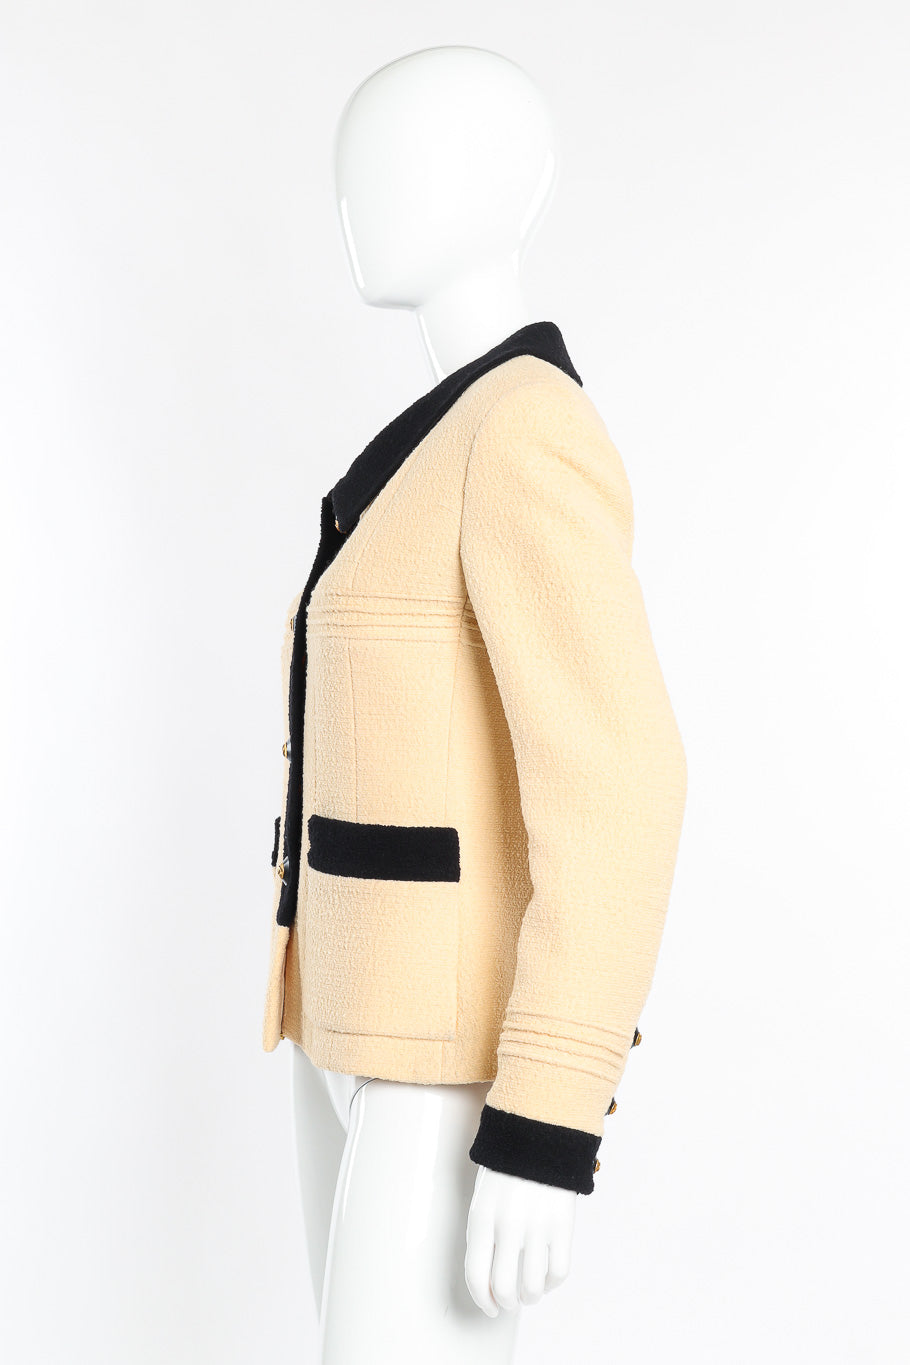 Vintage Chanel 1993 F/W Tweed Bouclé Jacket side view on mannequin @Recessla